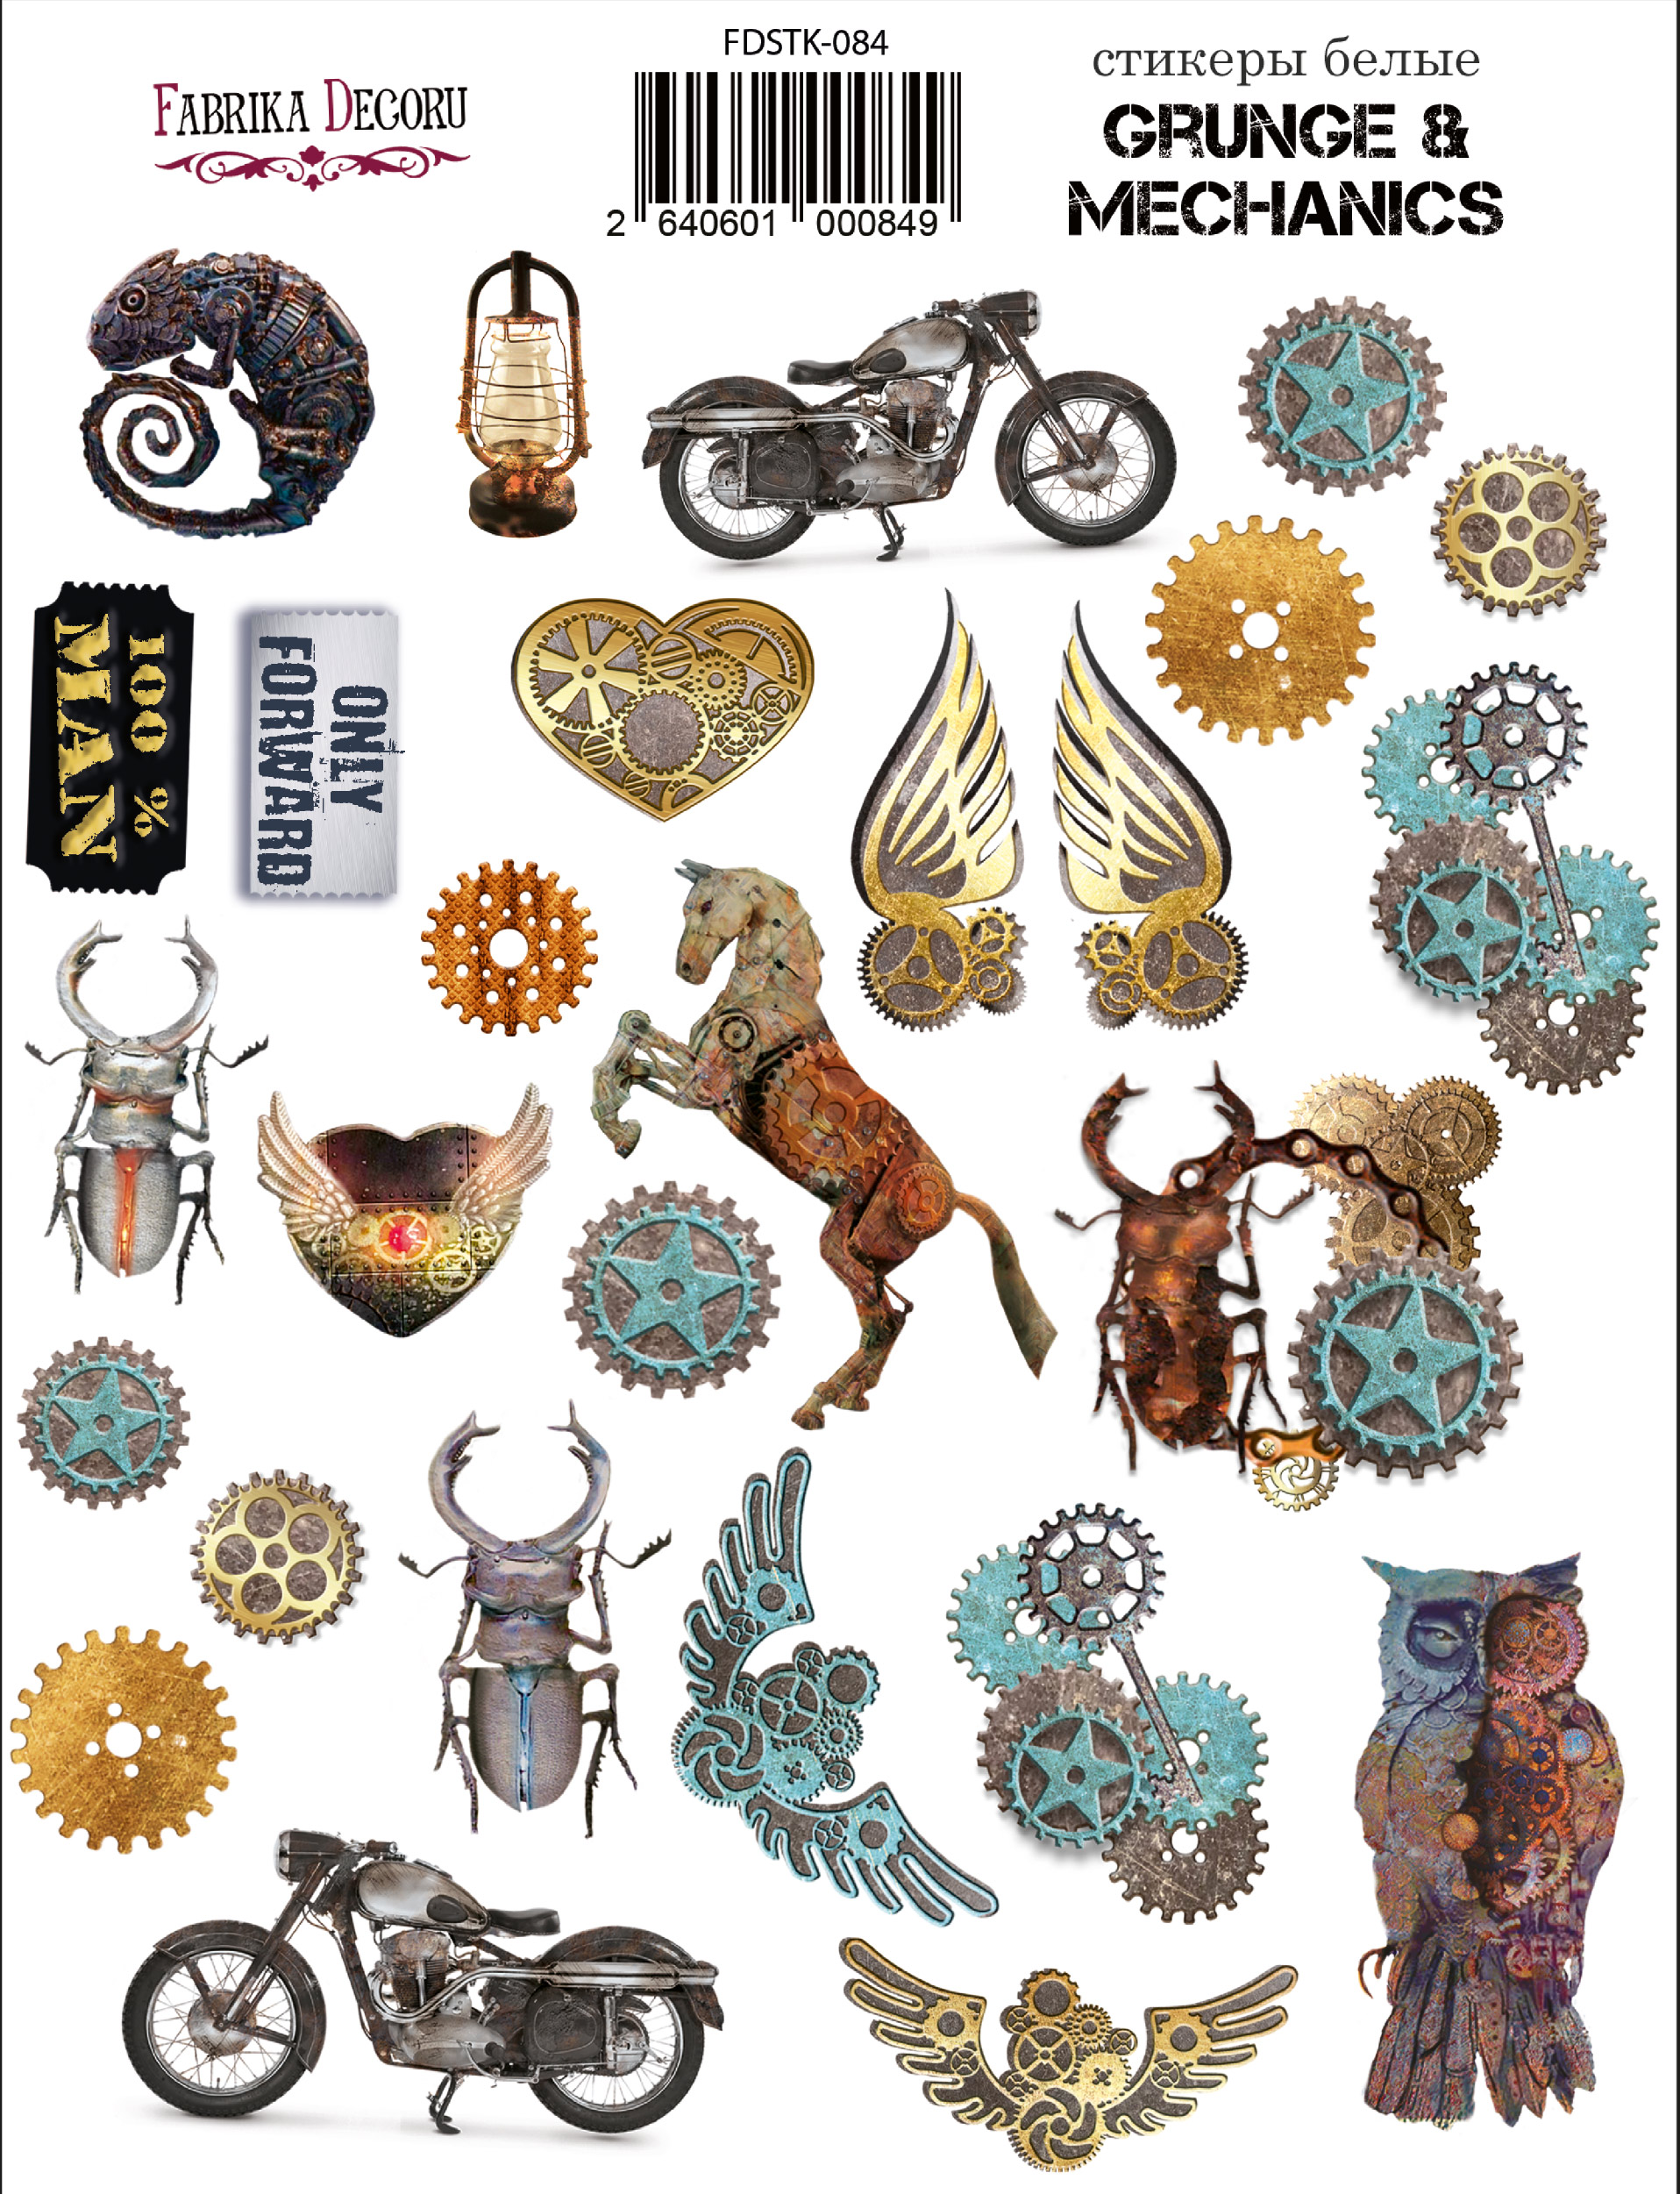 Kit of stickers Grunge&Mechanics #084